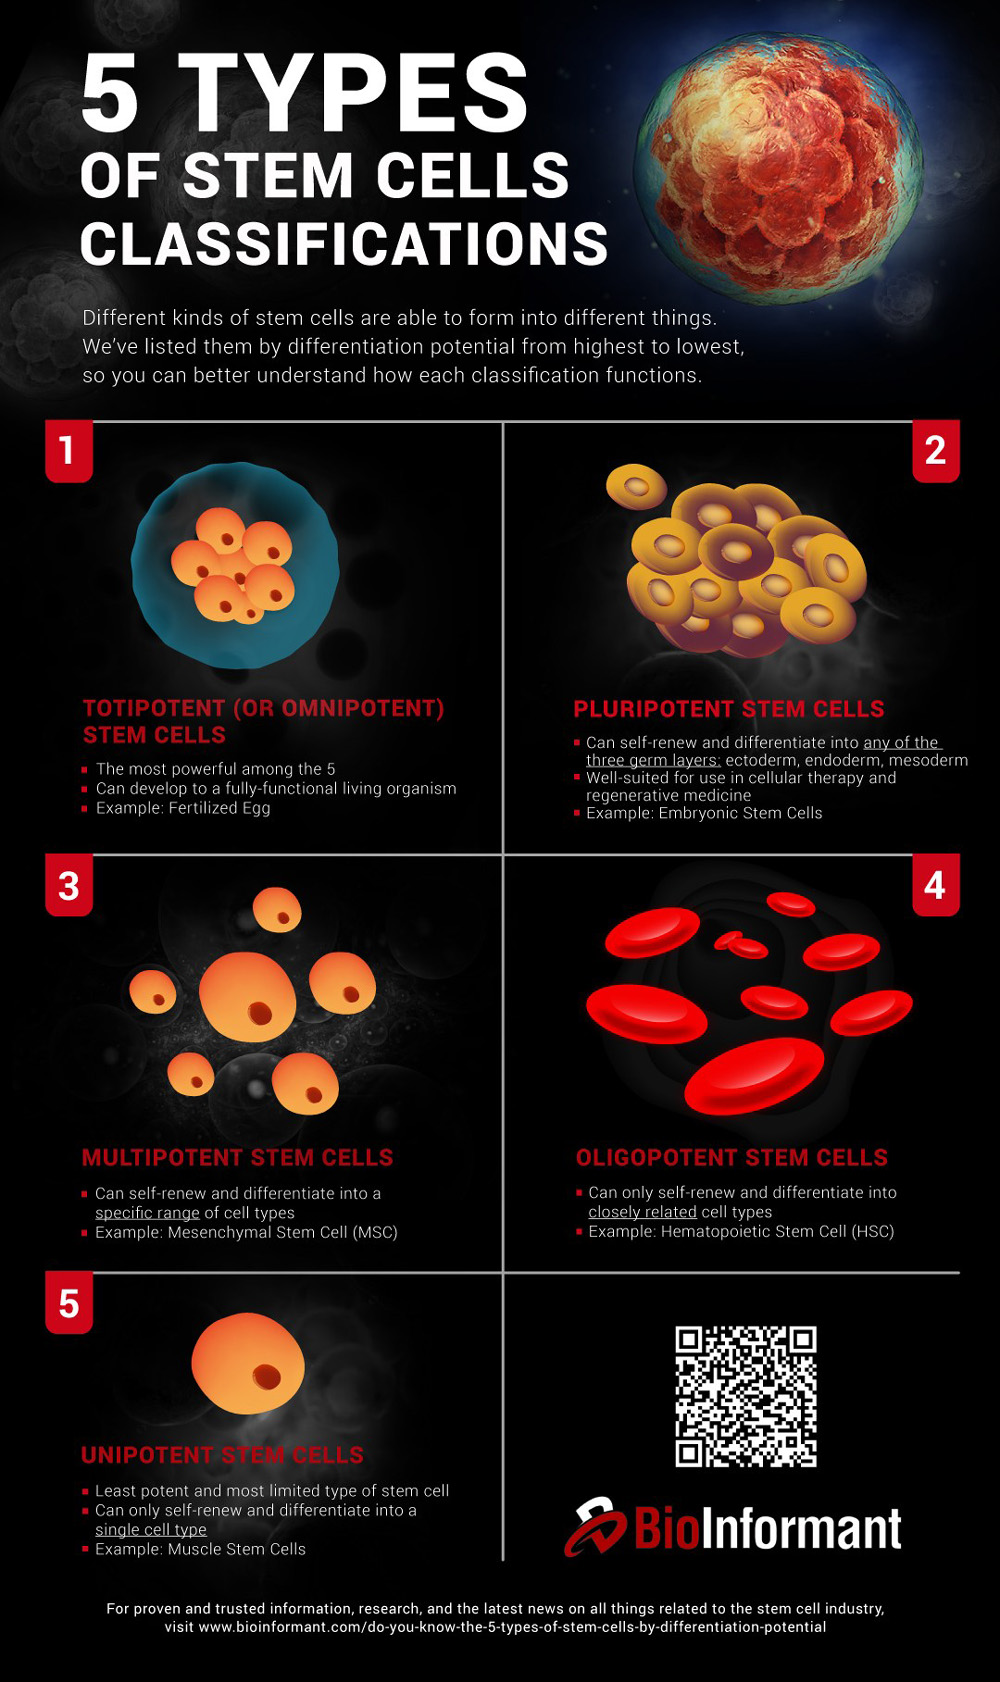 Types of stem cells